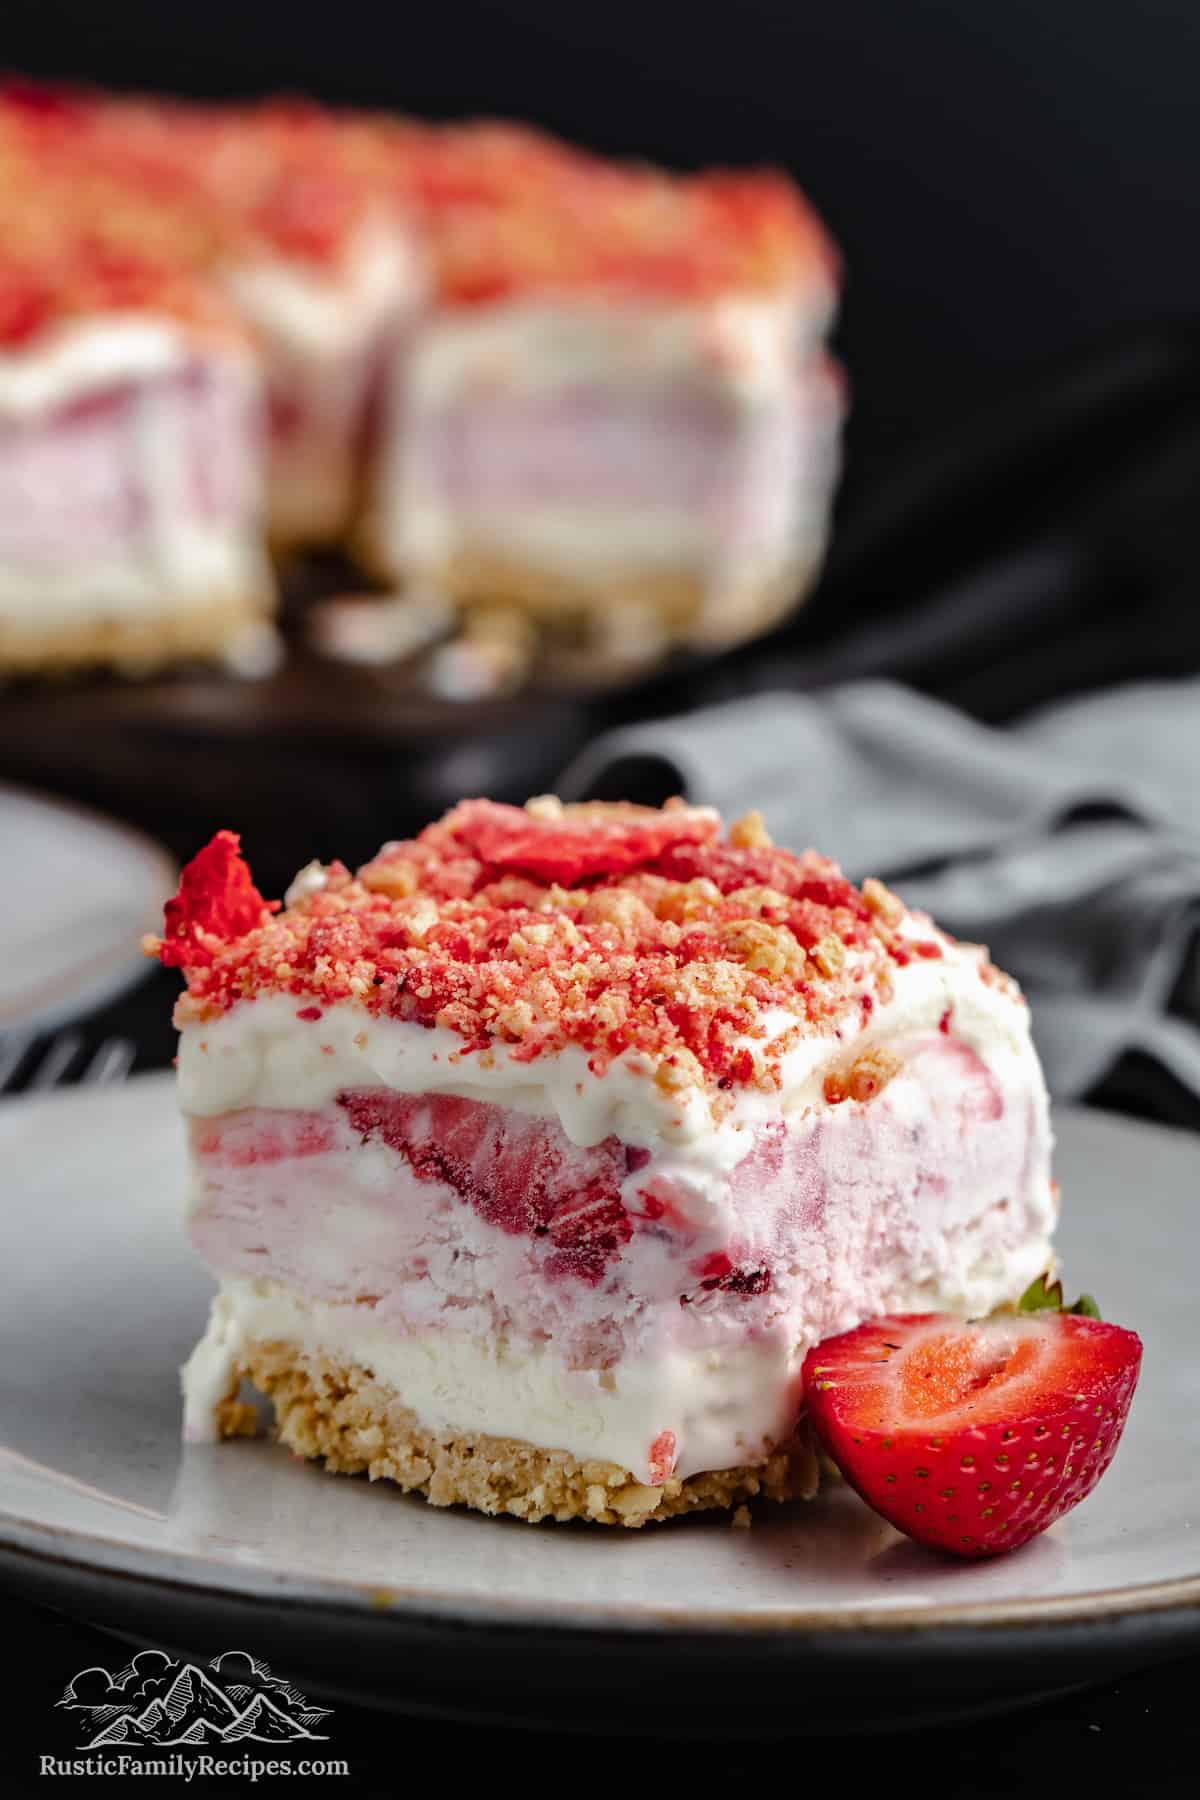 A strawberry shortcake ice cream bar on a plate next to half of a fresh strawberry.